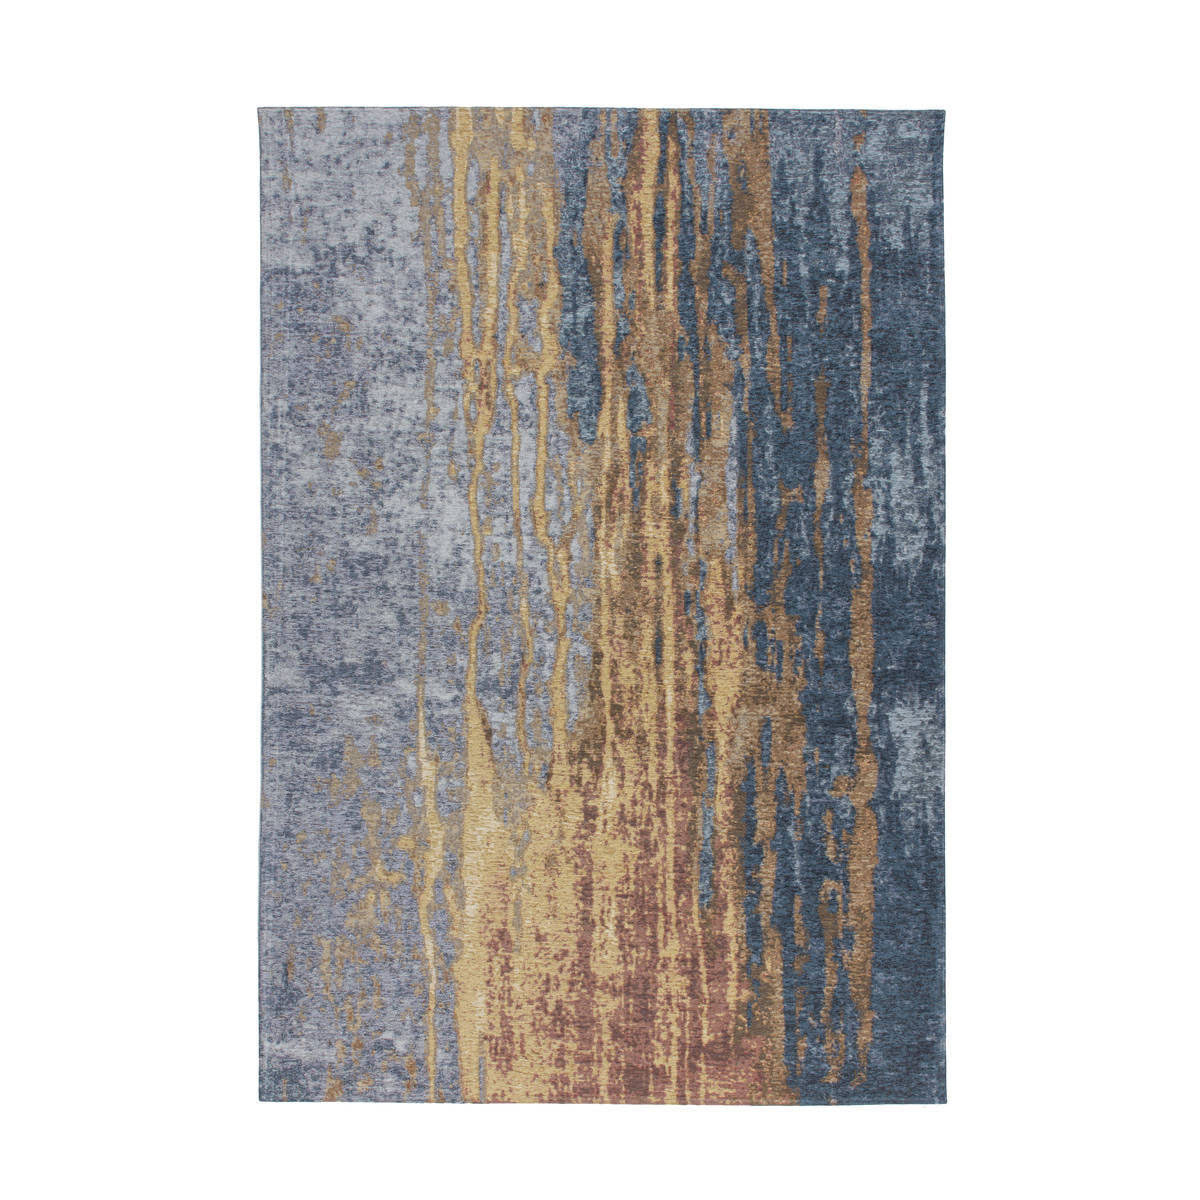 Jacquard-Teppich „Blaze 300“, beige/blau